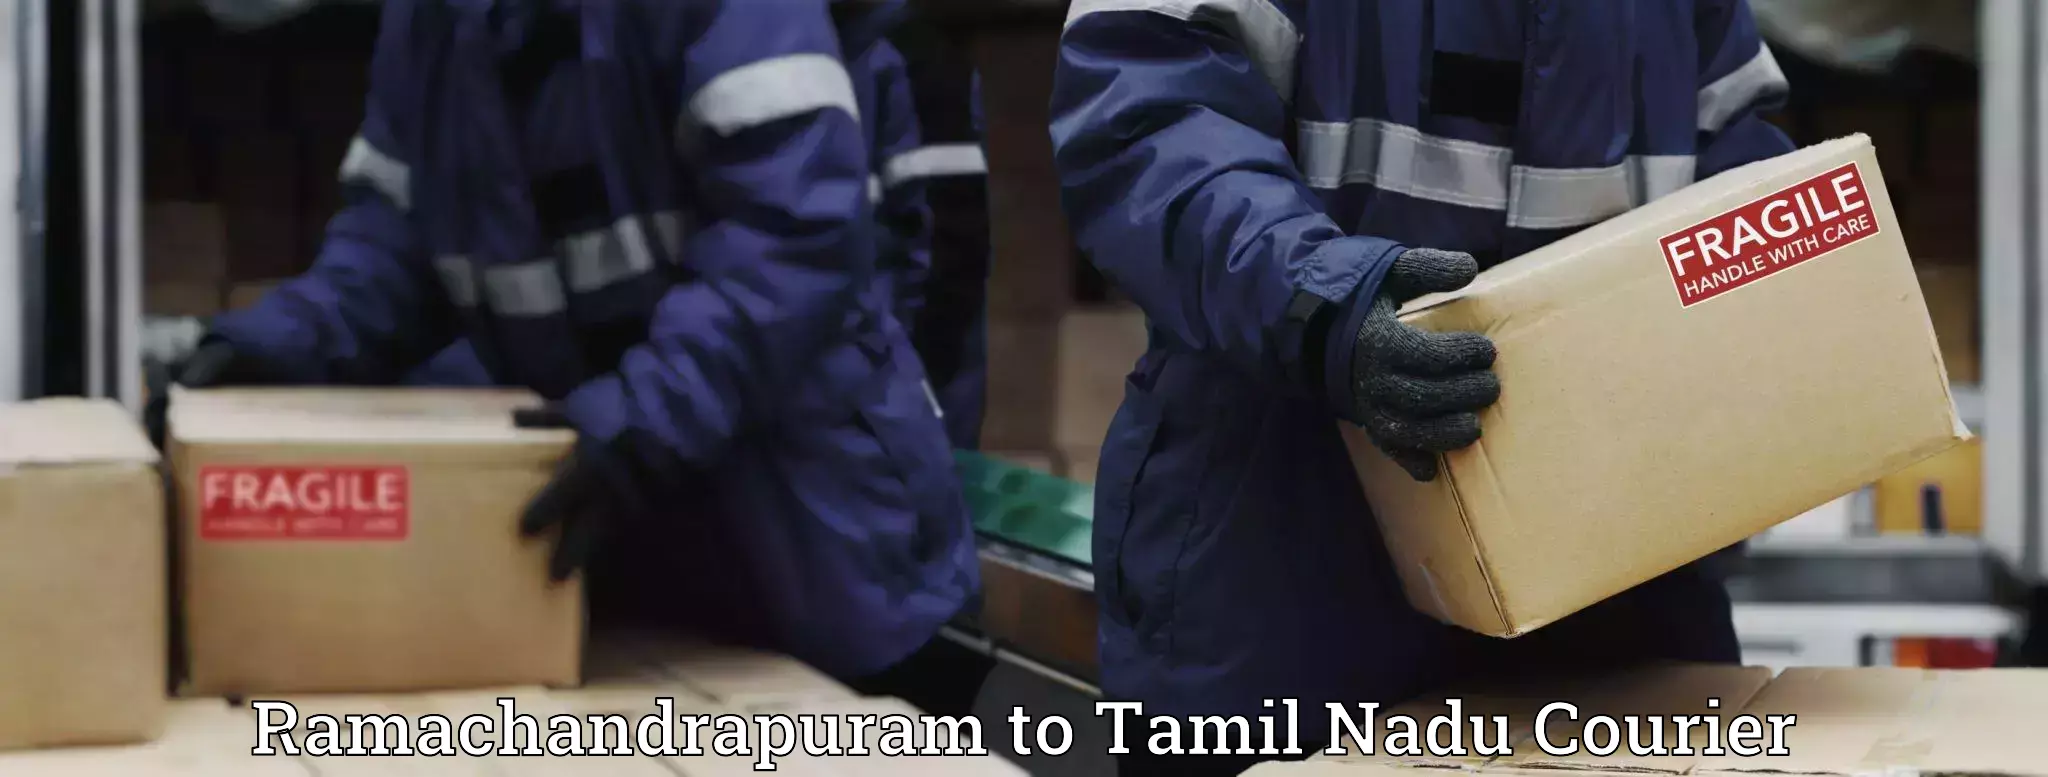 Parcel delivery automation Ramachandrapuram to Chennai Port